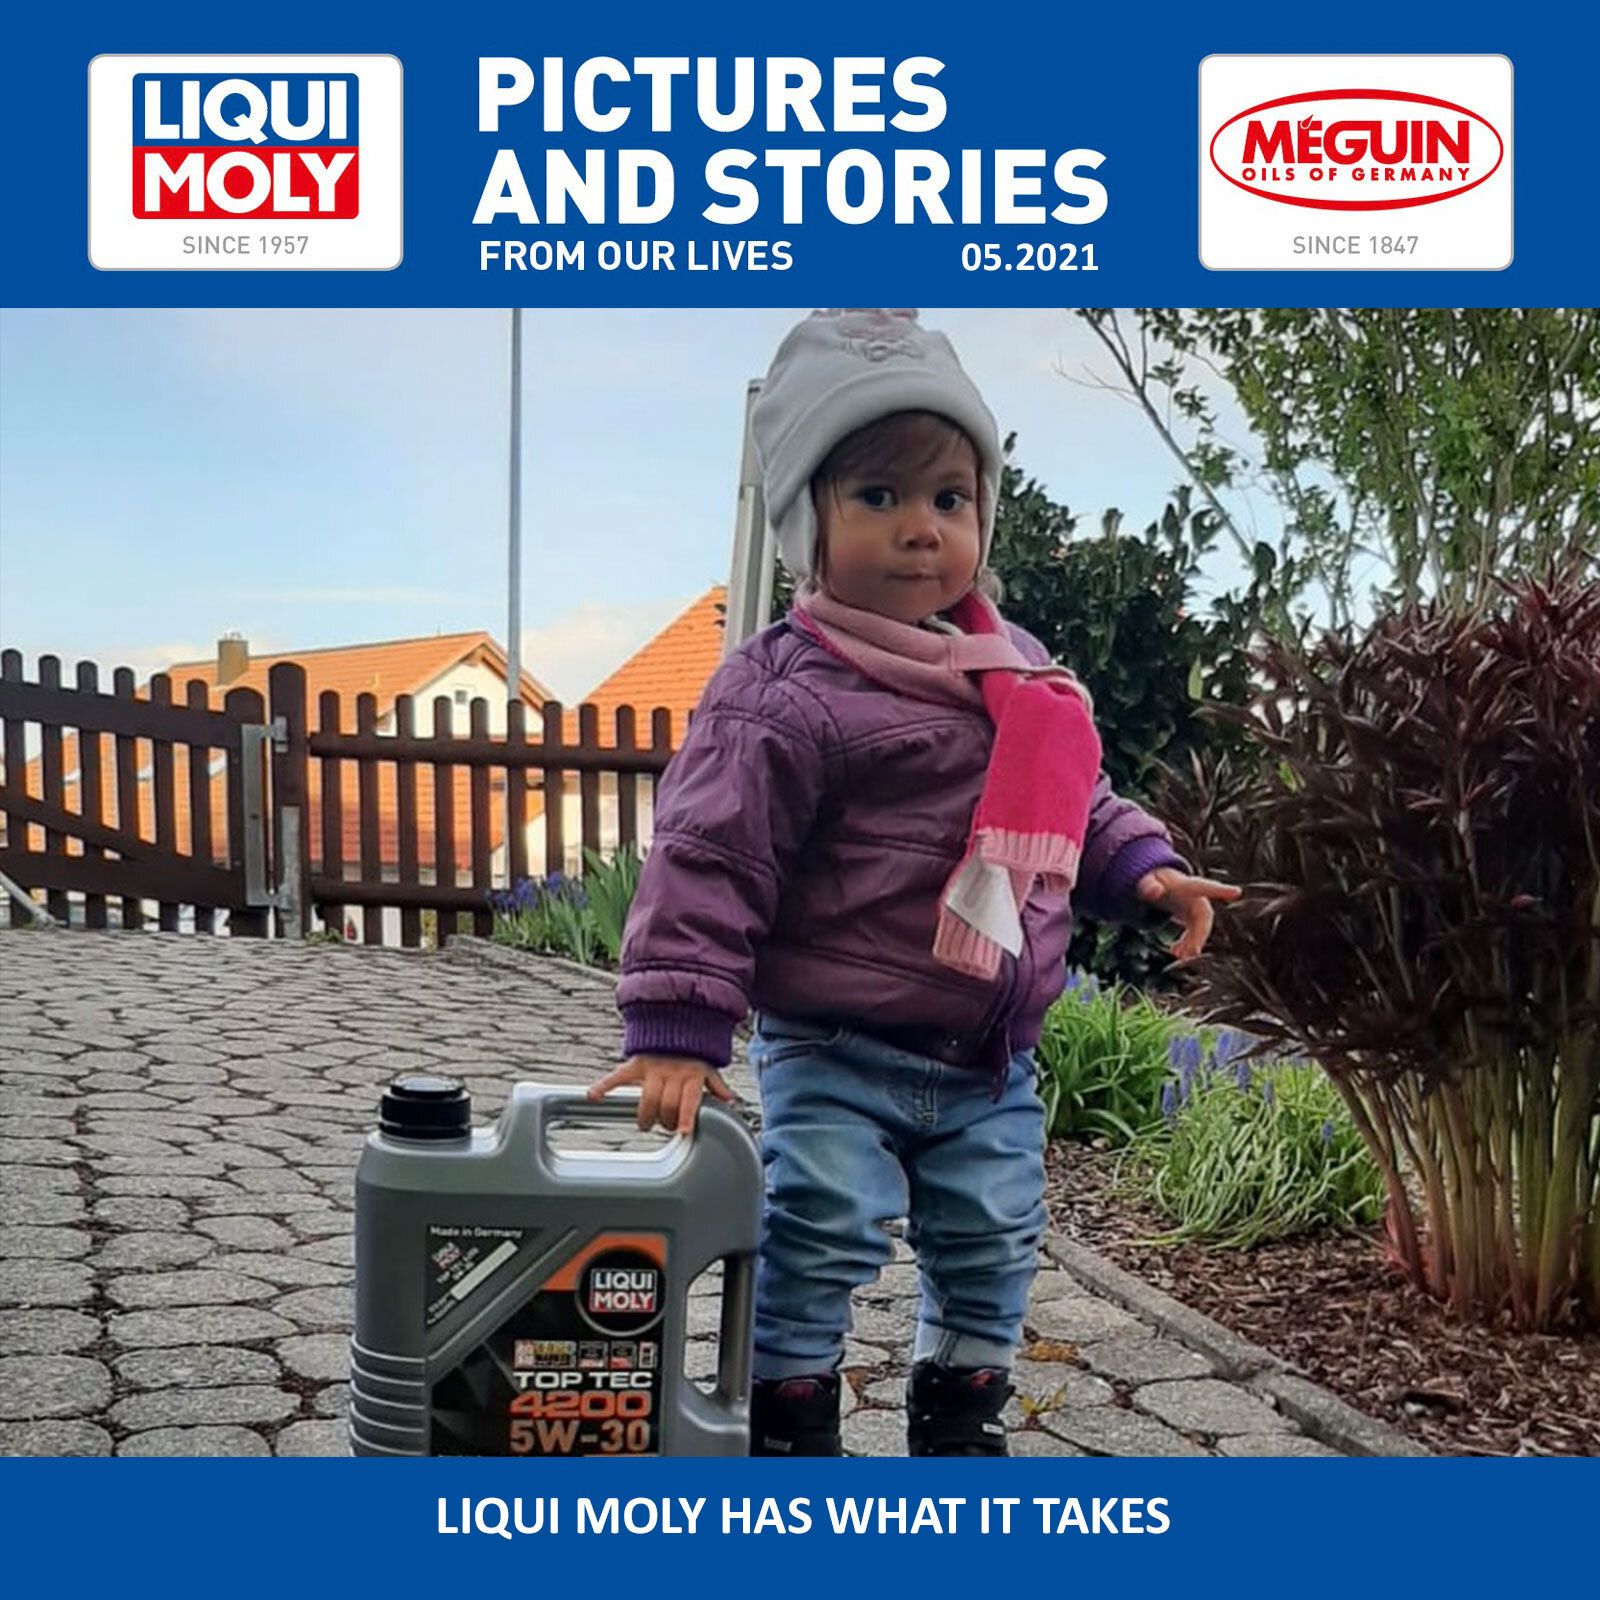 Magazine LIQUI MOLY Mayo: Liqui Moly has what it takes.